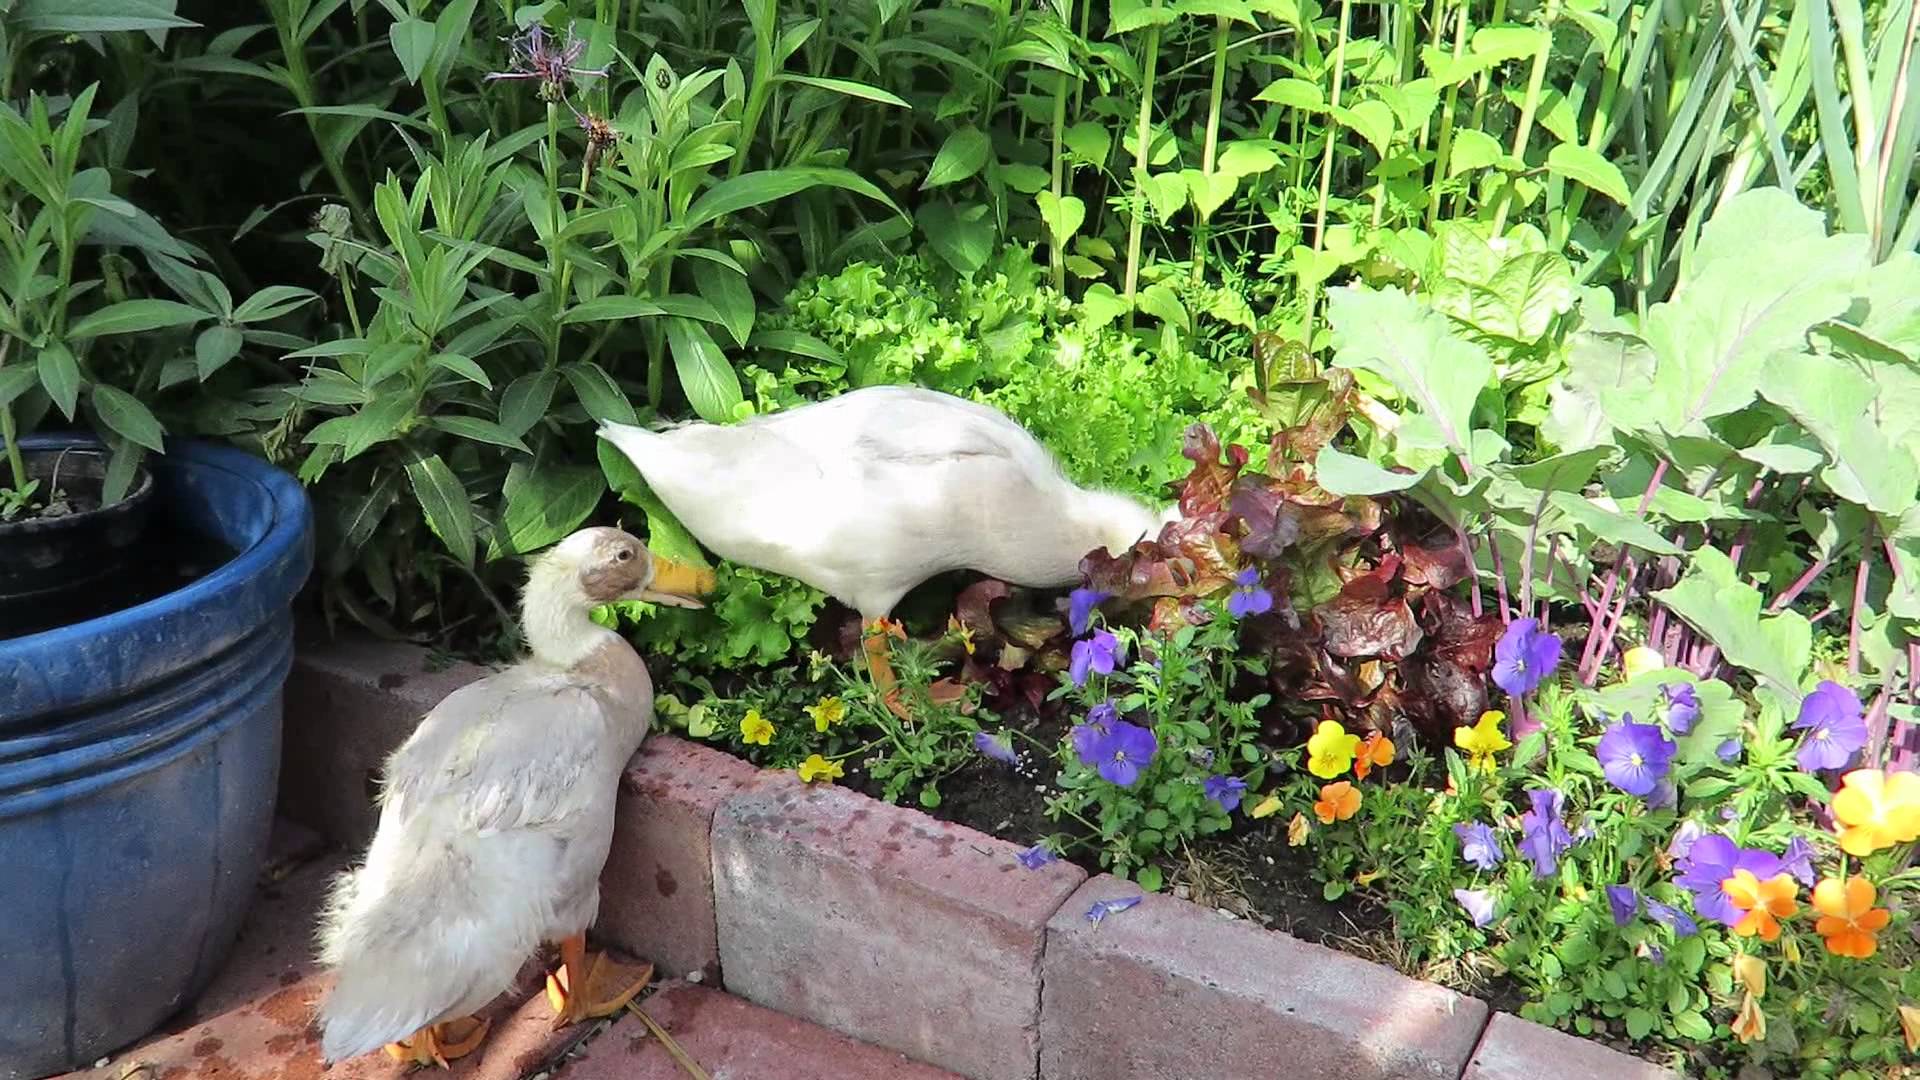 Ducks in the Garden - YouTube